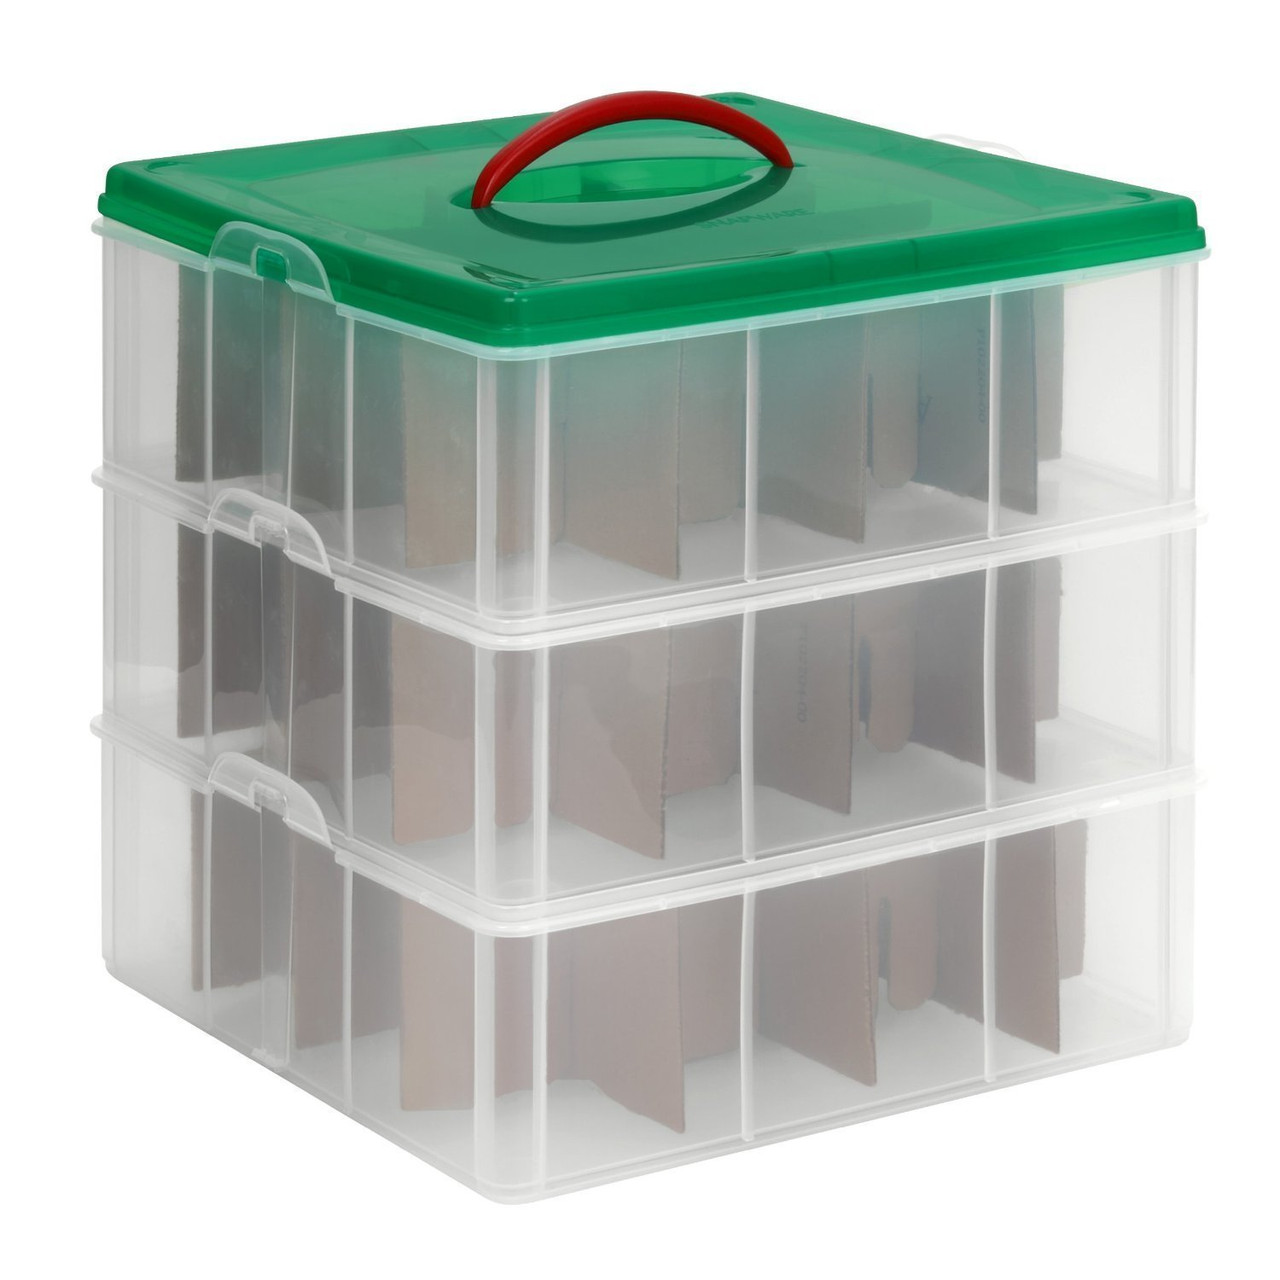 Snapware 13.1-in x 4.6-in-Compartment Clear Ornament Storage Box at